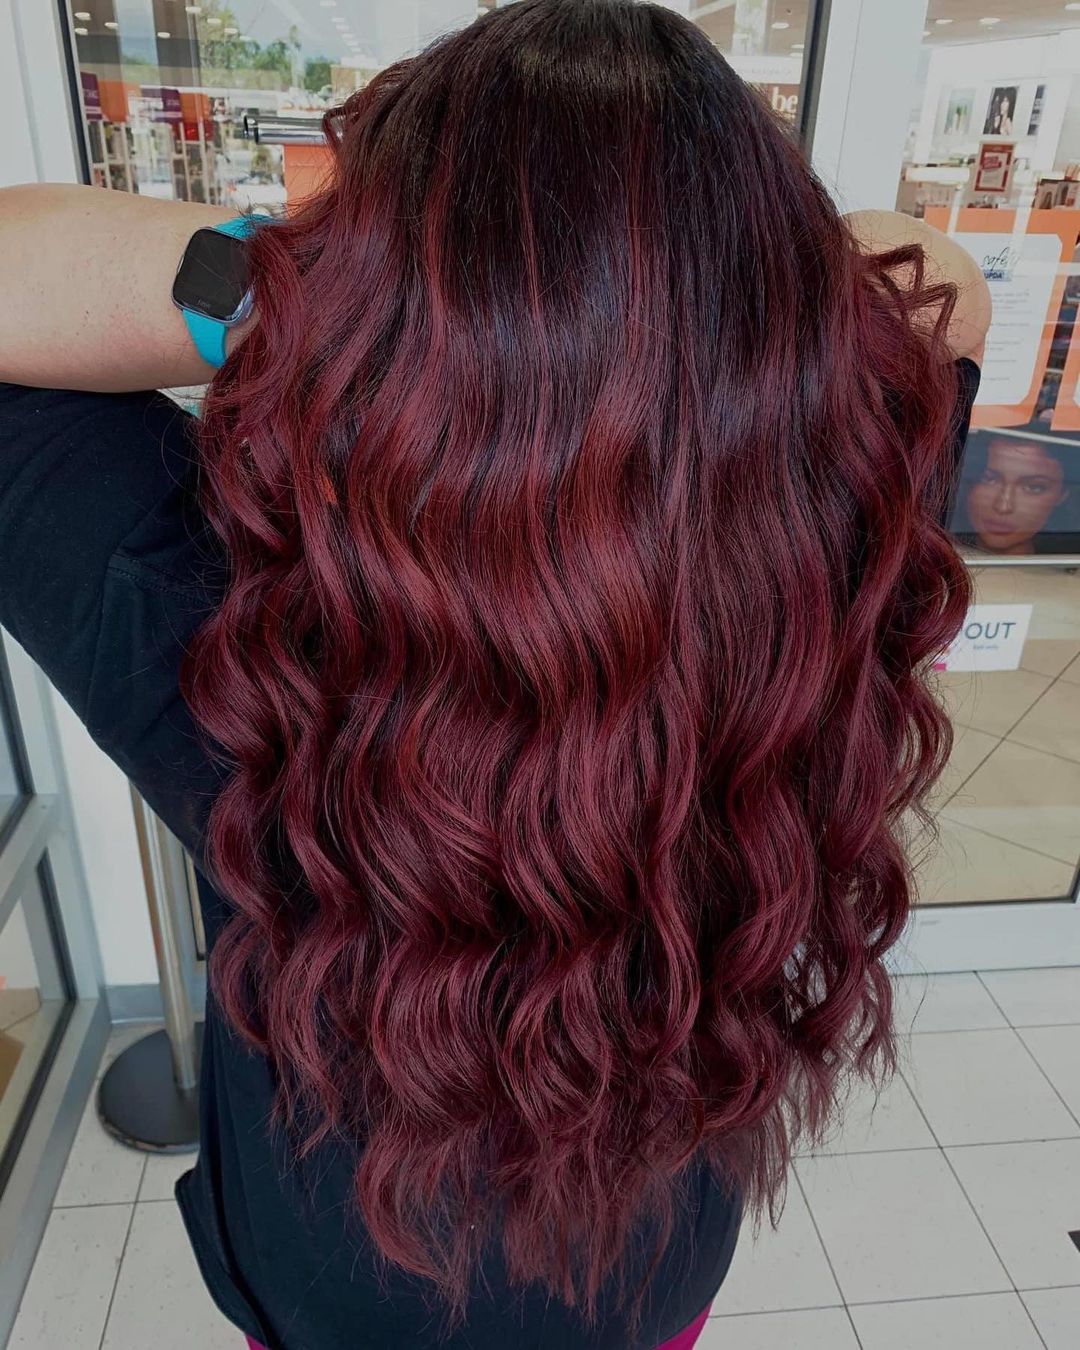 Black cherry coke hair color.